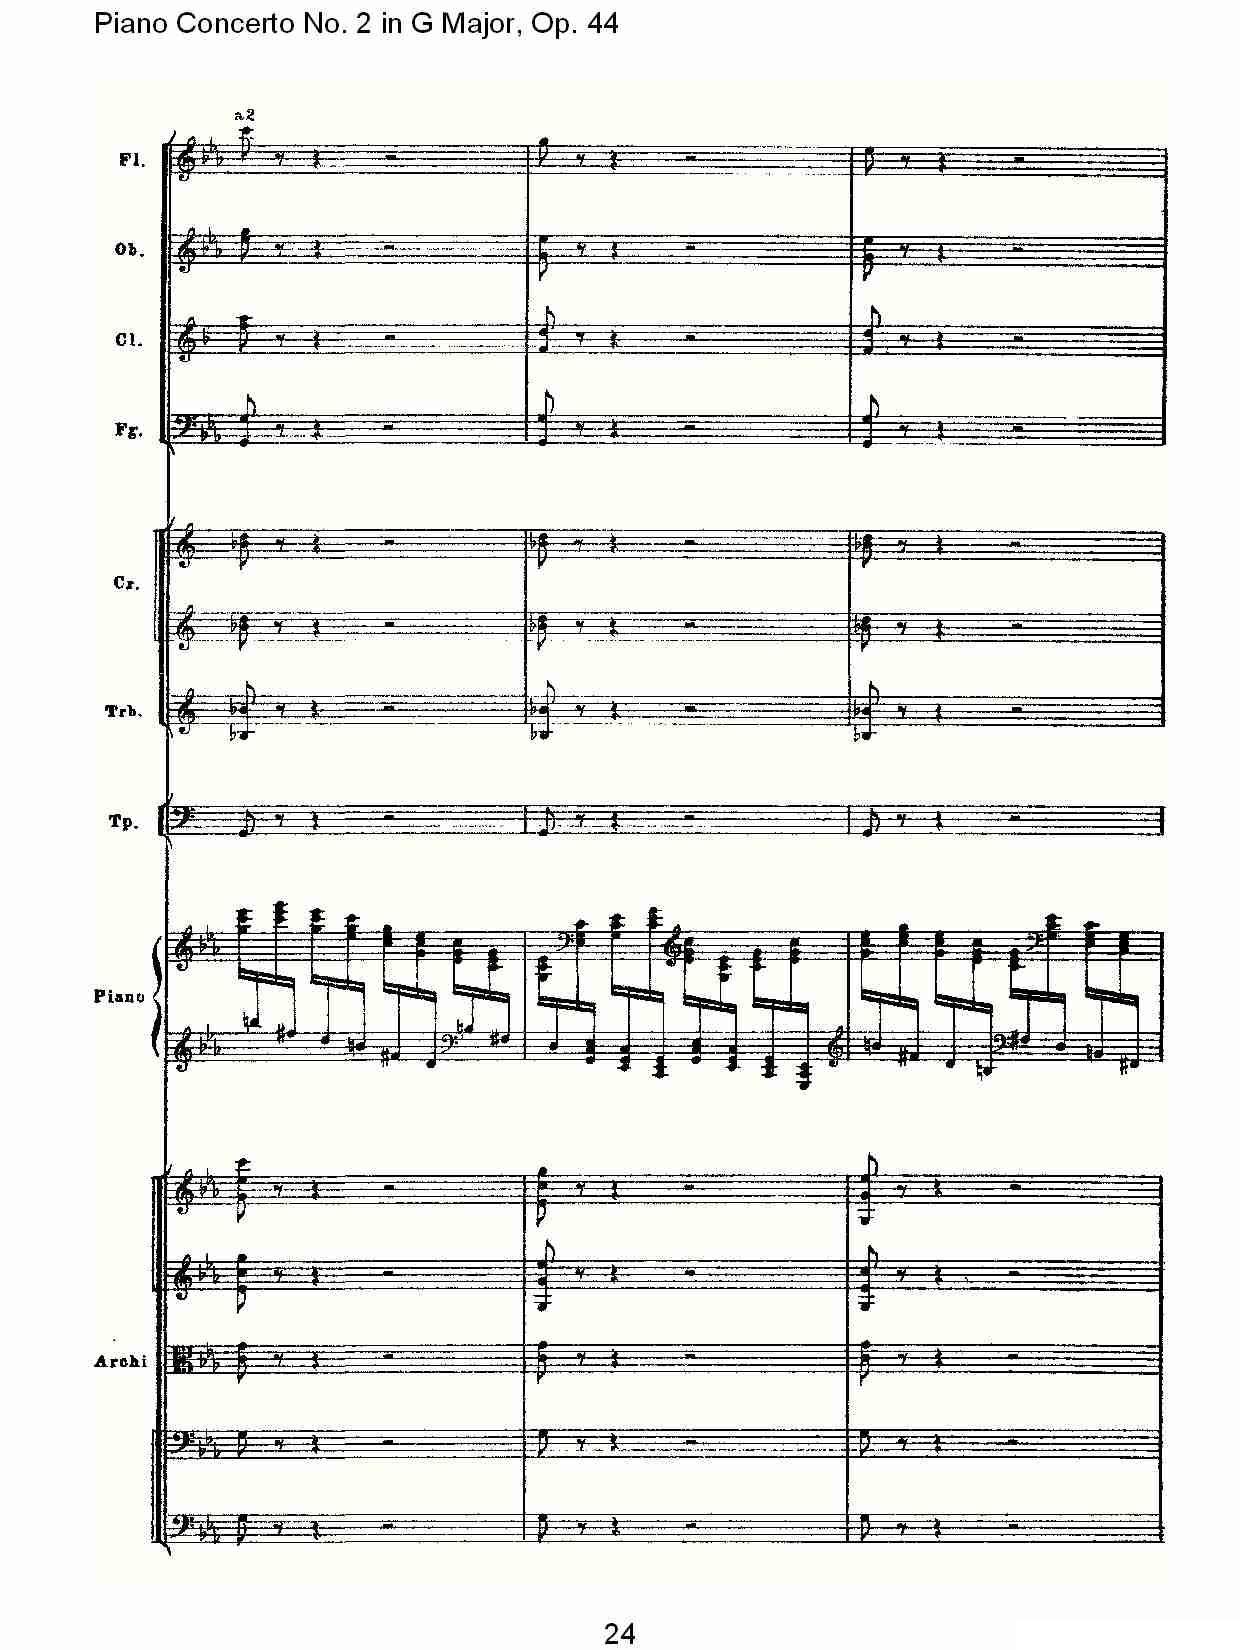 G大调第二钢琴协奏曲, Op.44第一乐章（一）钢琴曲谱（图24）